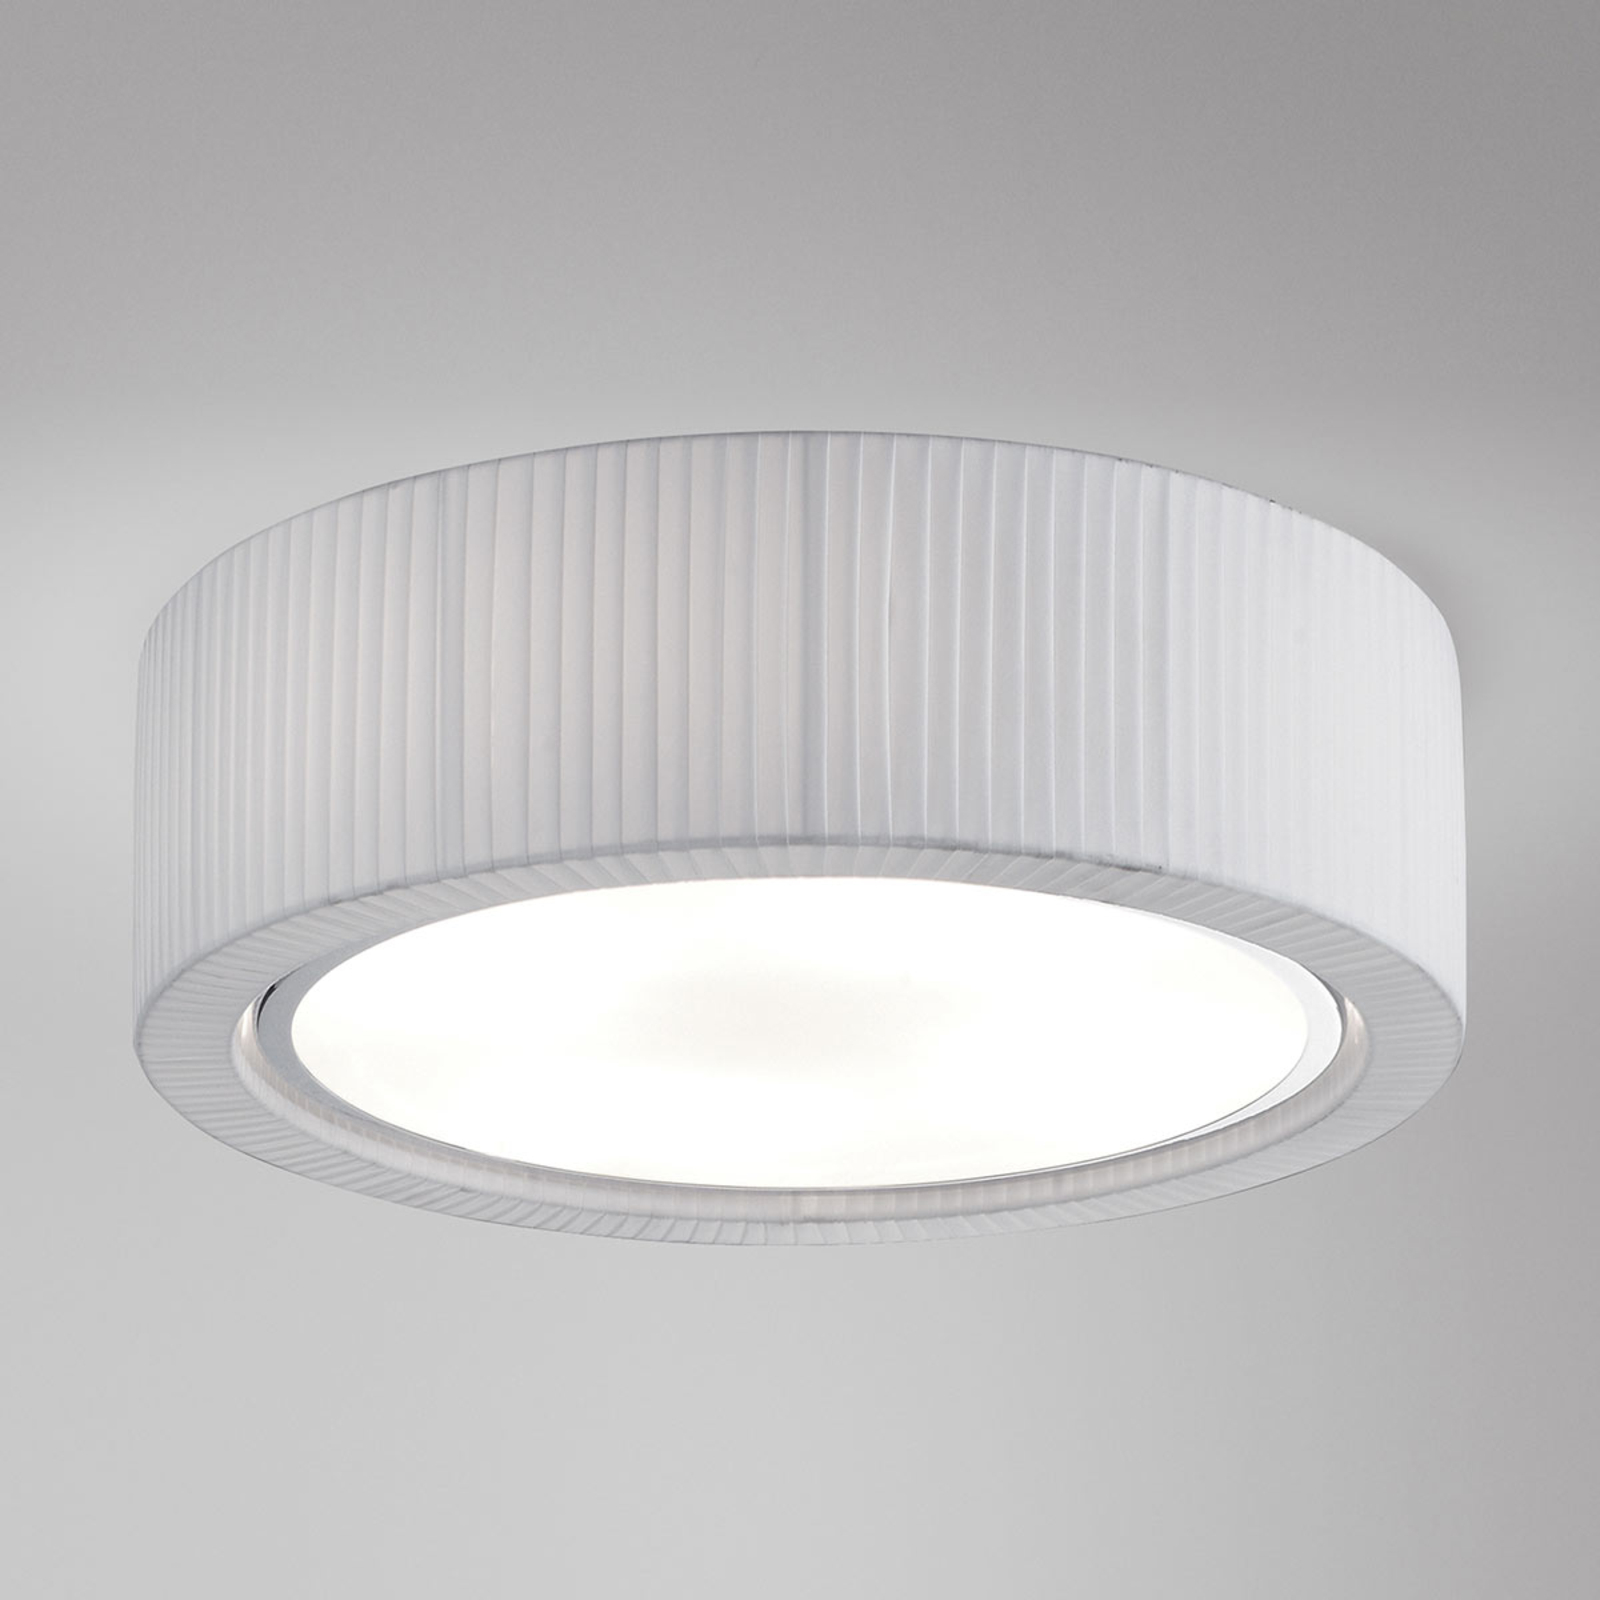 Bover Urban PF/37 lampa sufitowa, biała, 37 cm